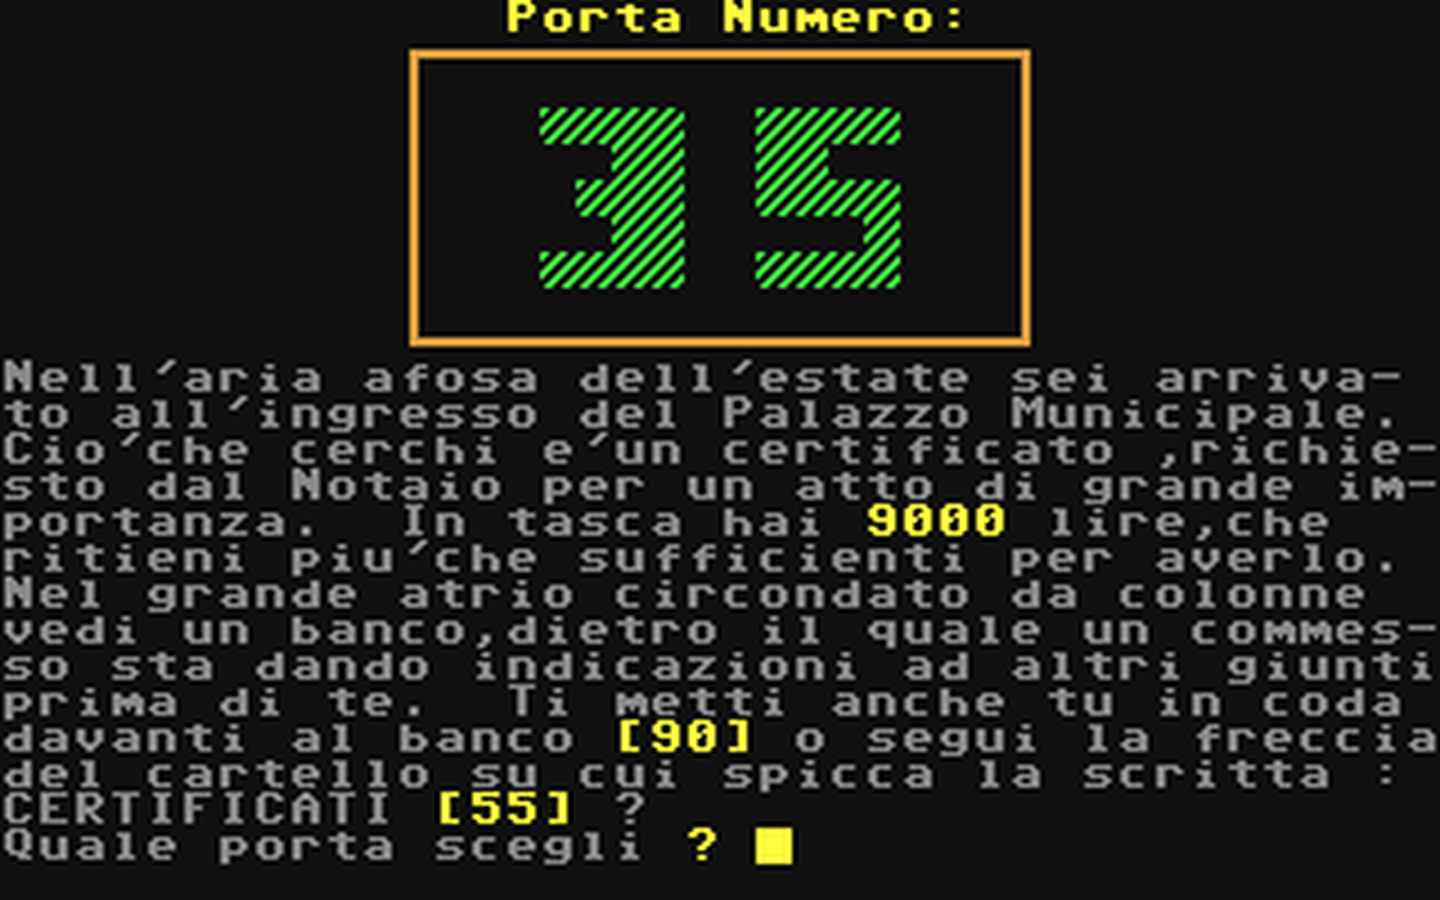 C64 GameBase Municipality_Mysterious,_The_-_Il_Municipio_Misterioso Ok-Soft/64